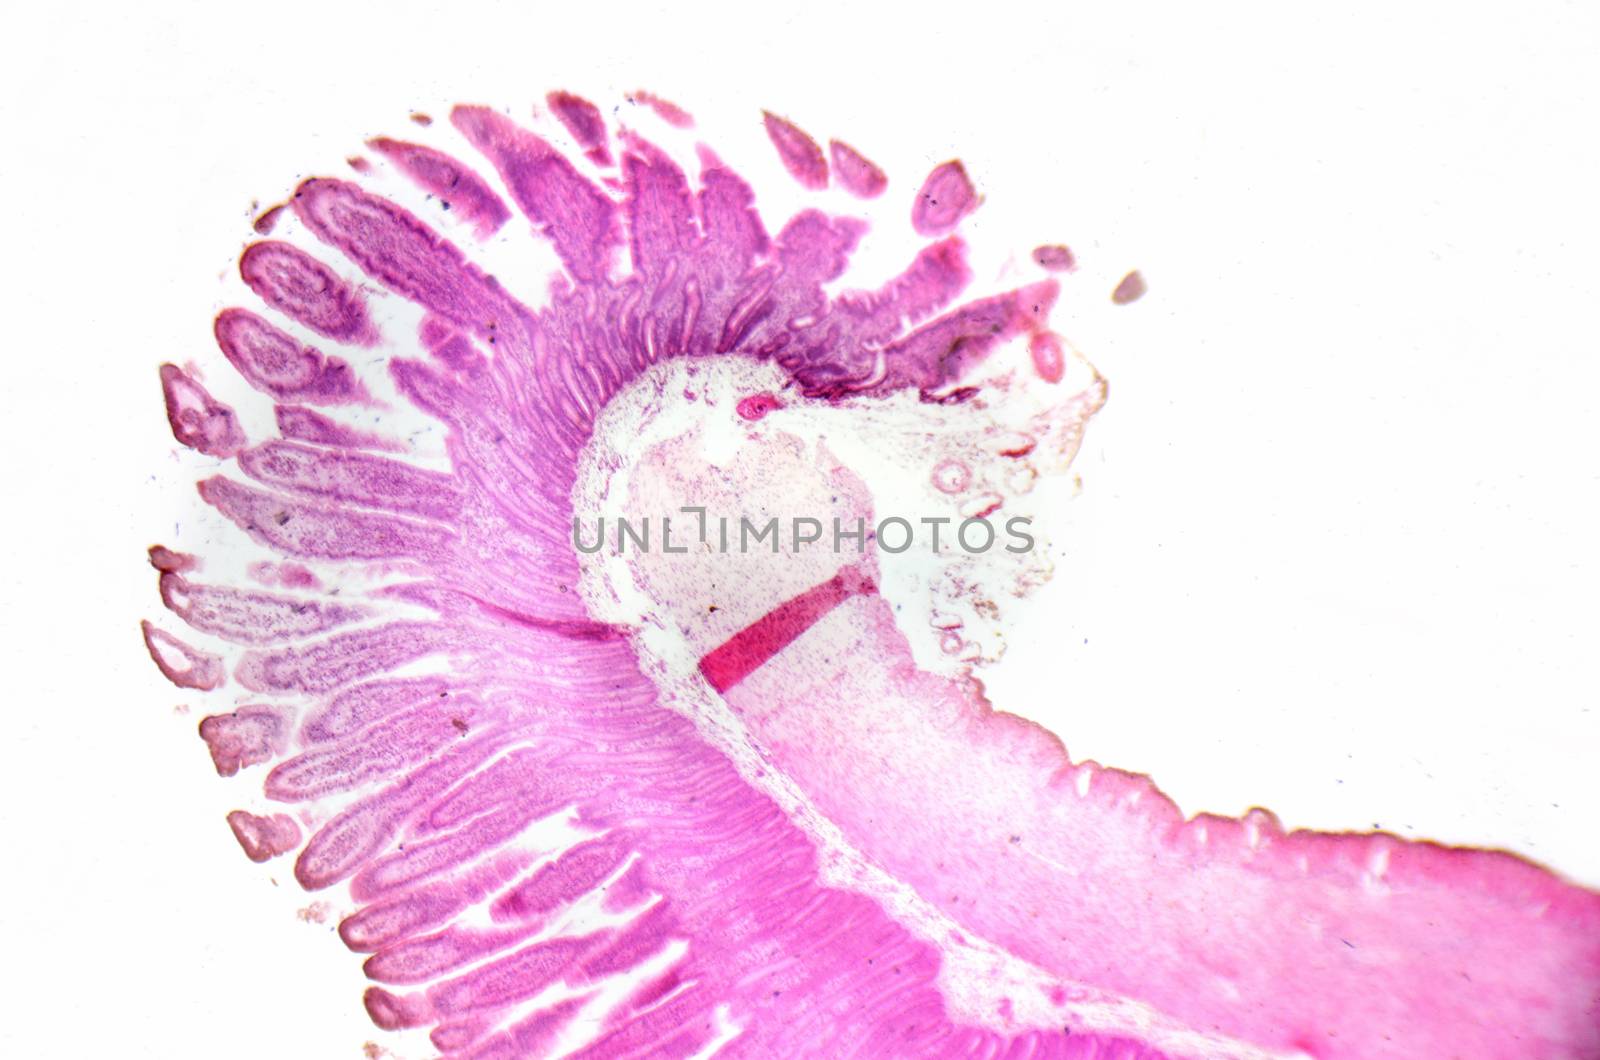 Microscopy photography. Small intestine transversal section.